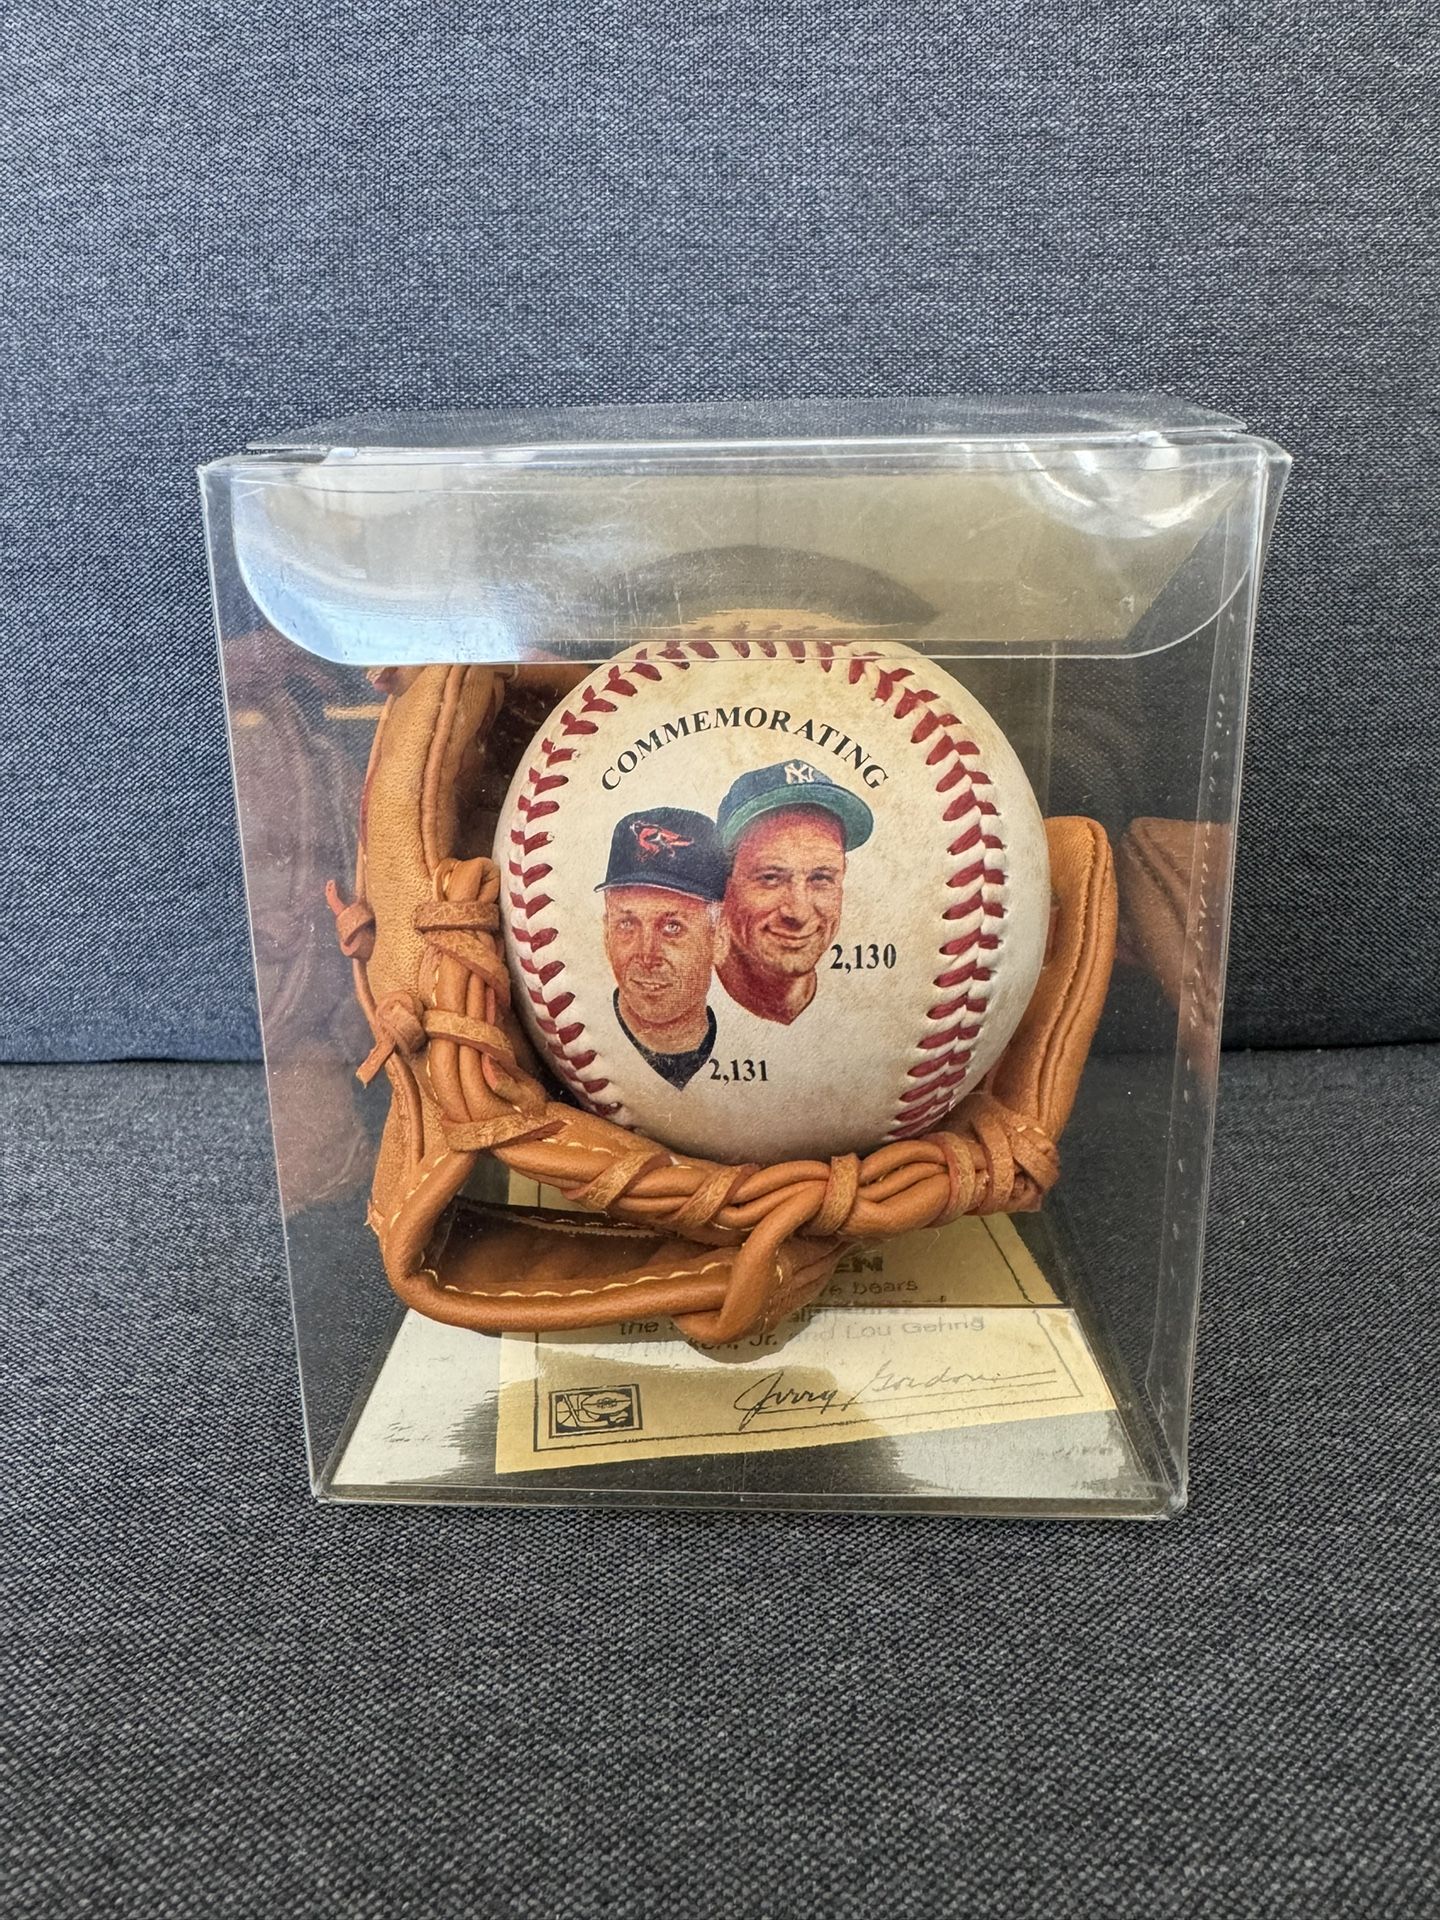 Ironmen Commemorative Baseball & Glove signed in box -Lou Gehrig Cal Ripken Jr